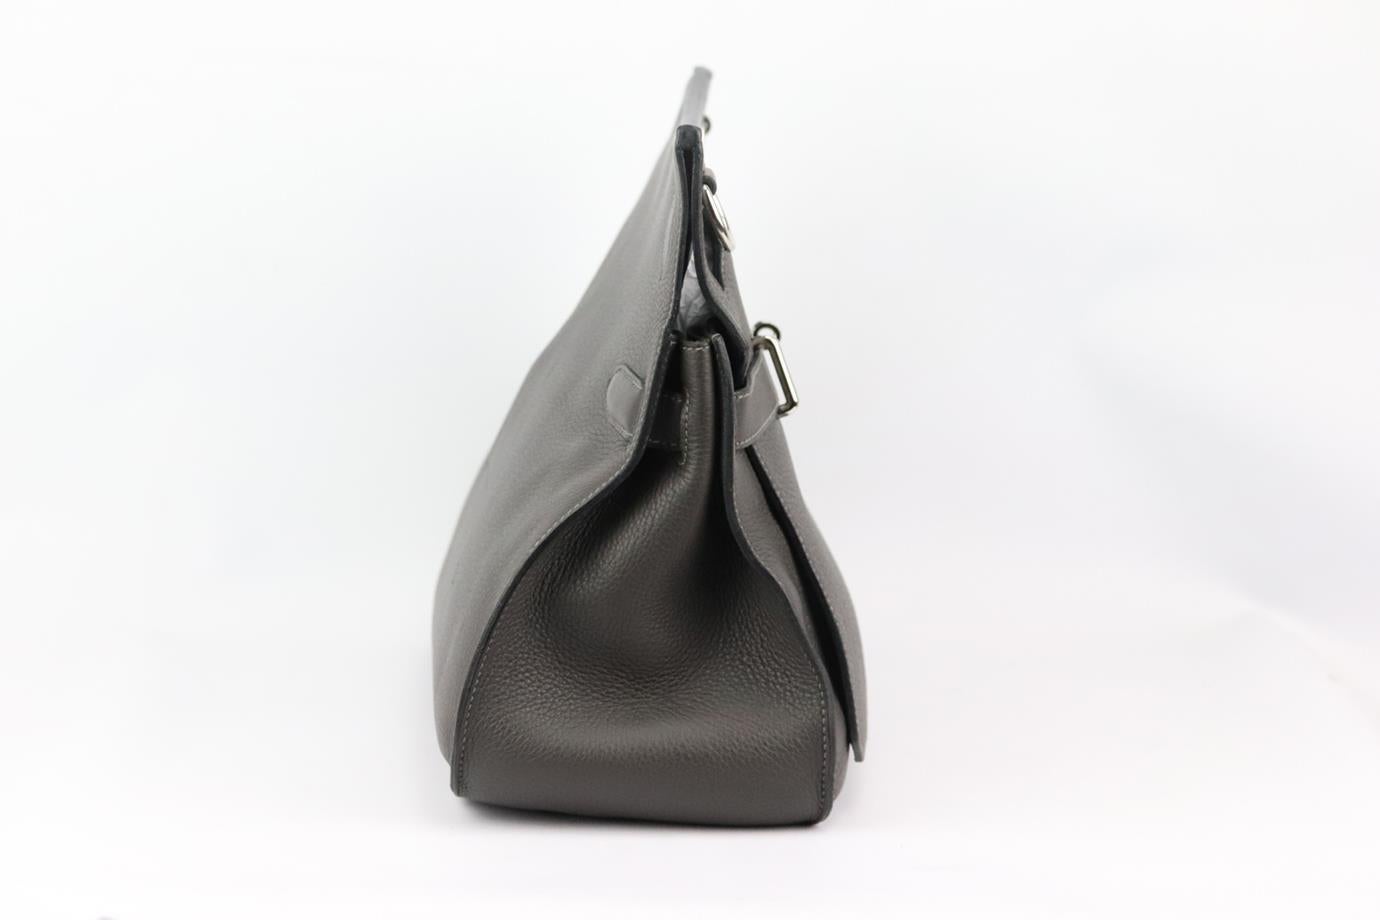 Hermès 2009 Jypsière 36cm Leather Shoulder Bag In Excellent Condition For Sale In London, GB